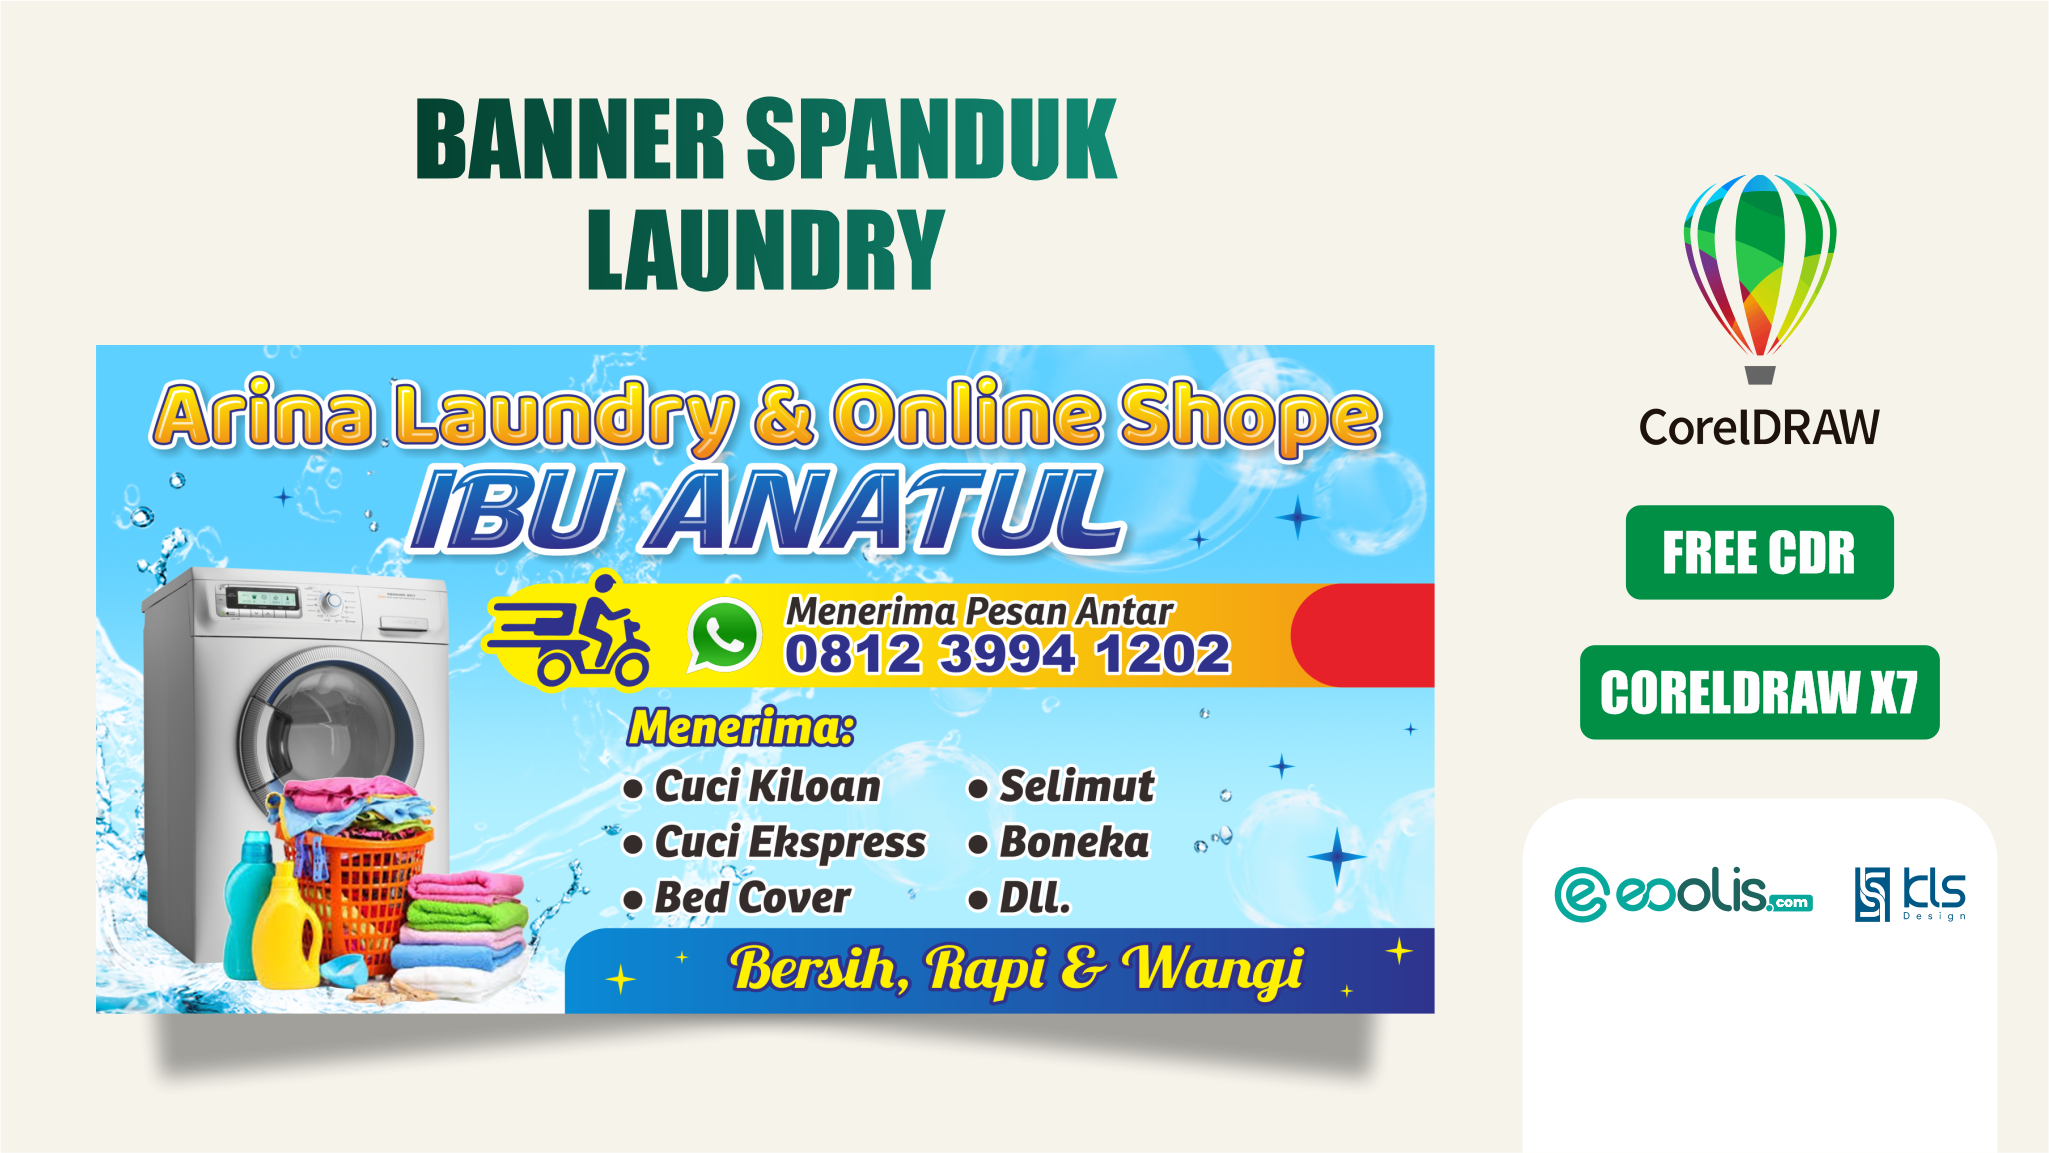 Banner Spanduk Laundry - eoolis.com